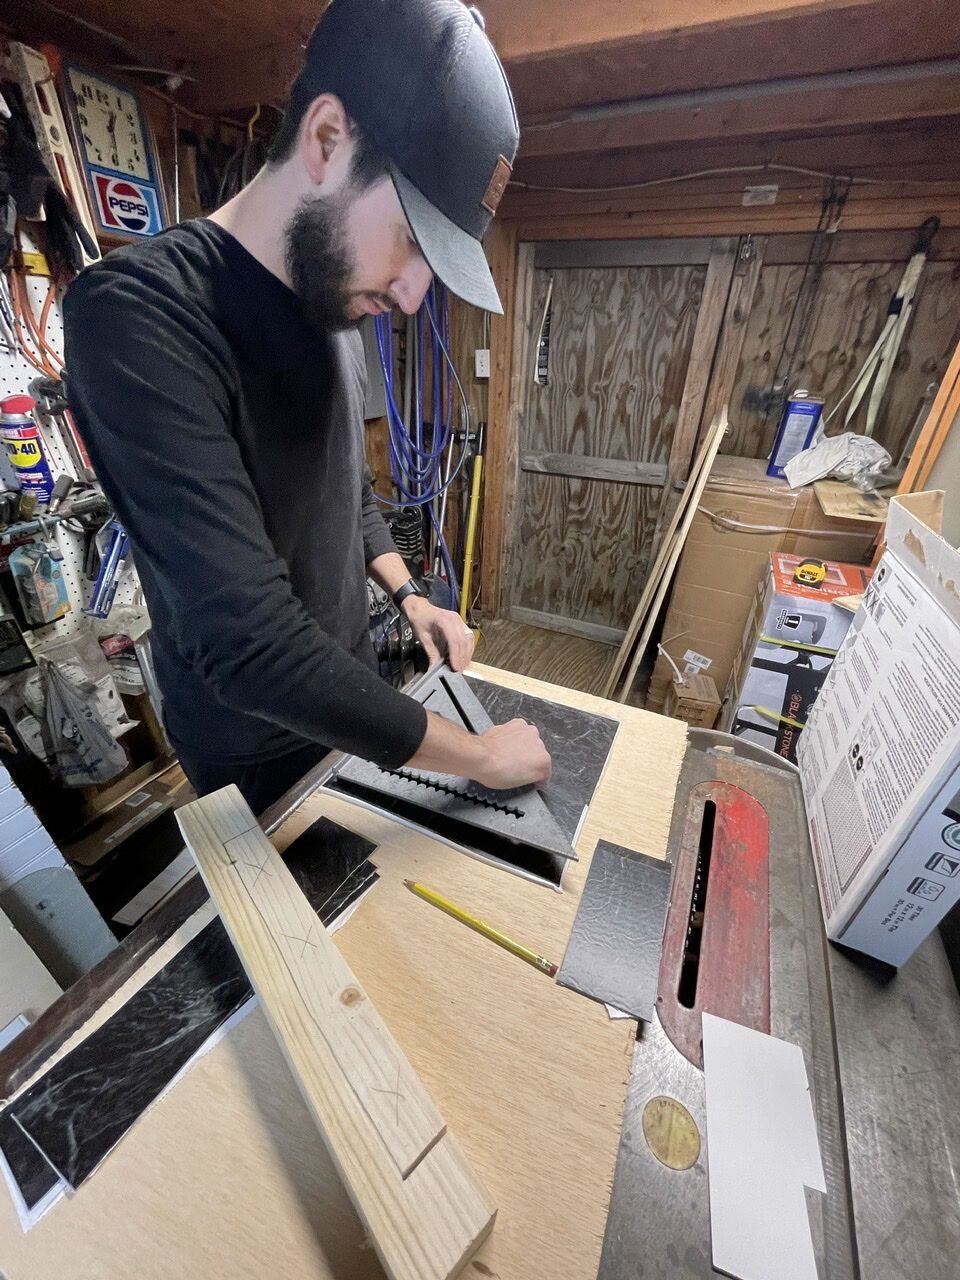 Man working in shed on measuring vinyl tiles